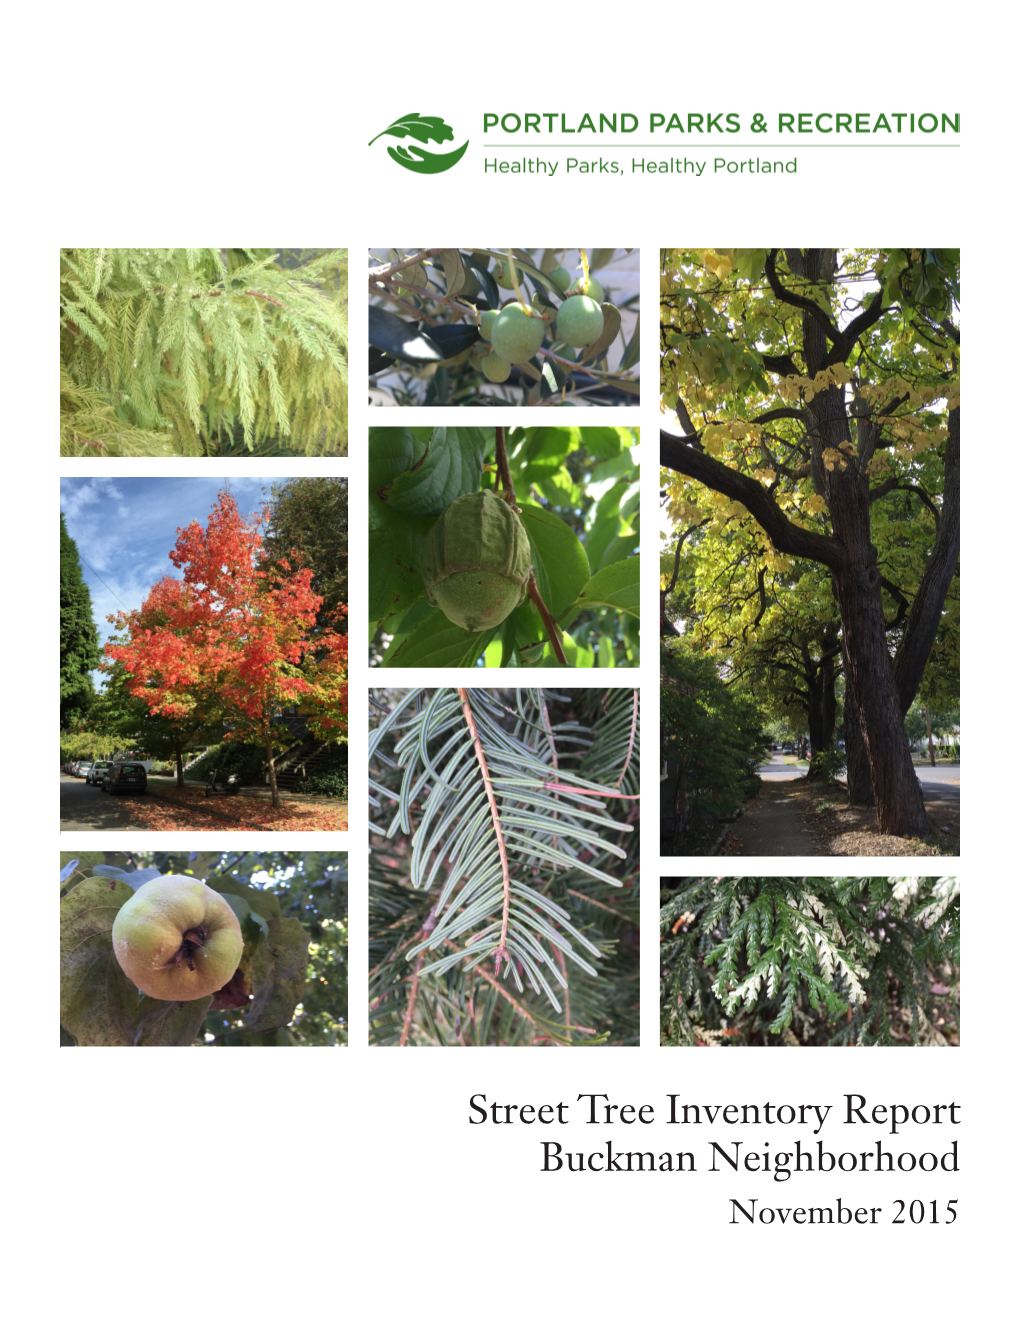 Street Tree Inventory Report Buckman Neighborhood November 2015 Street Tree Inventory Report: Buckman Neighborhood November 2015